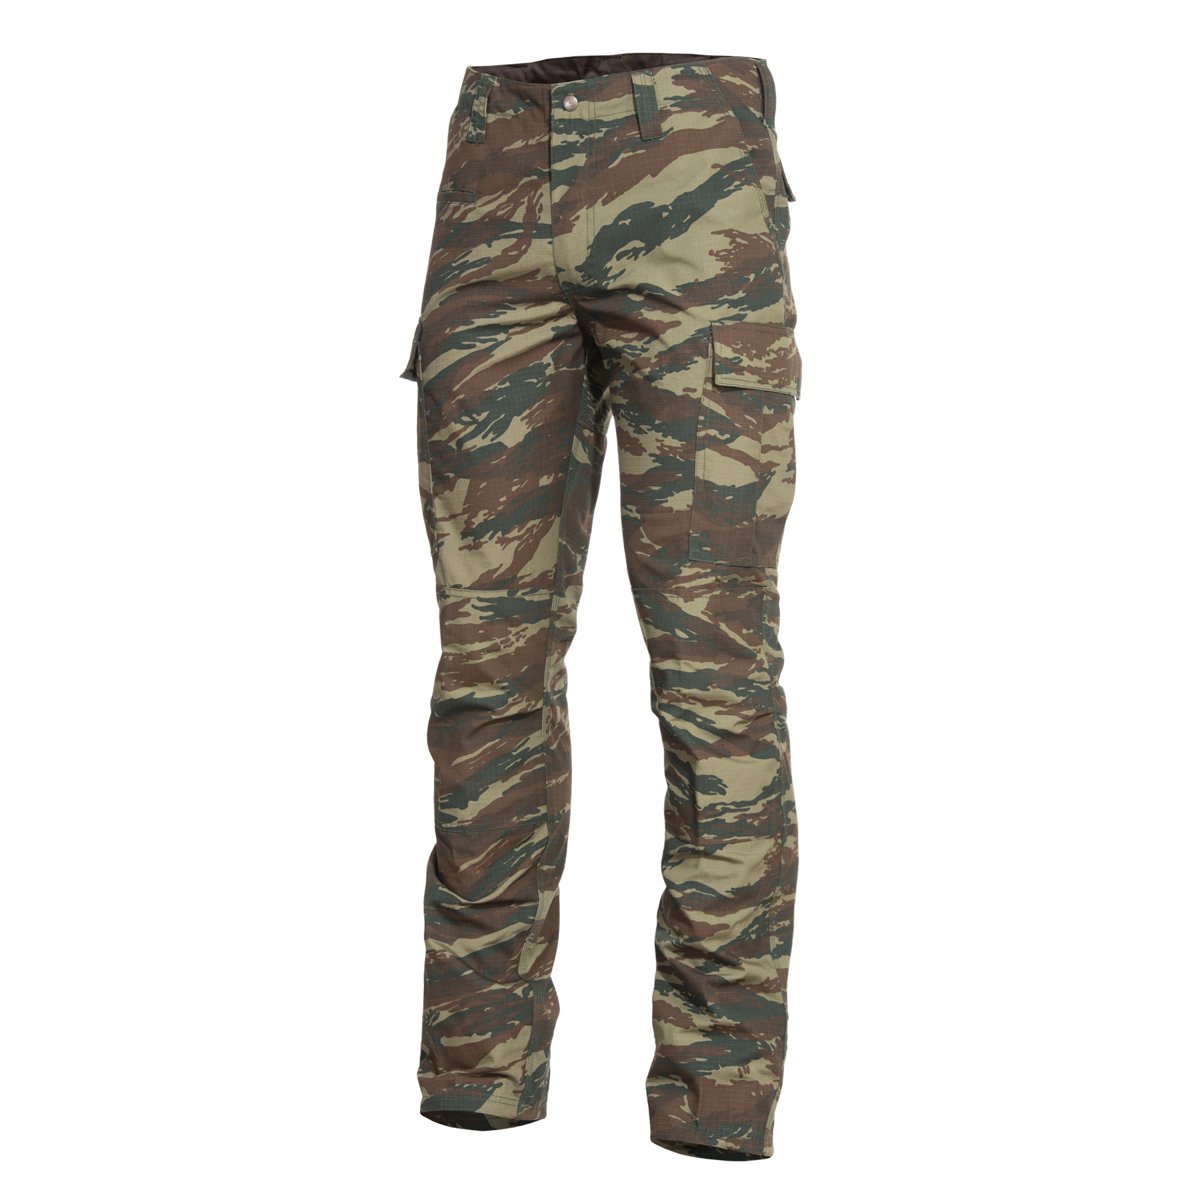 Pentagon BDU 2.0 Pants, Greek Camo (K05001-Camo-2.0-56) | CLOTHING ...